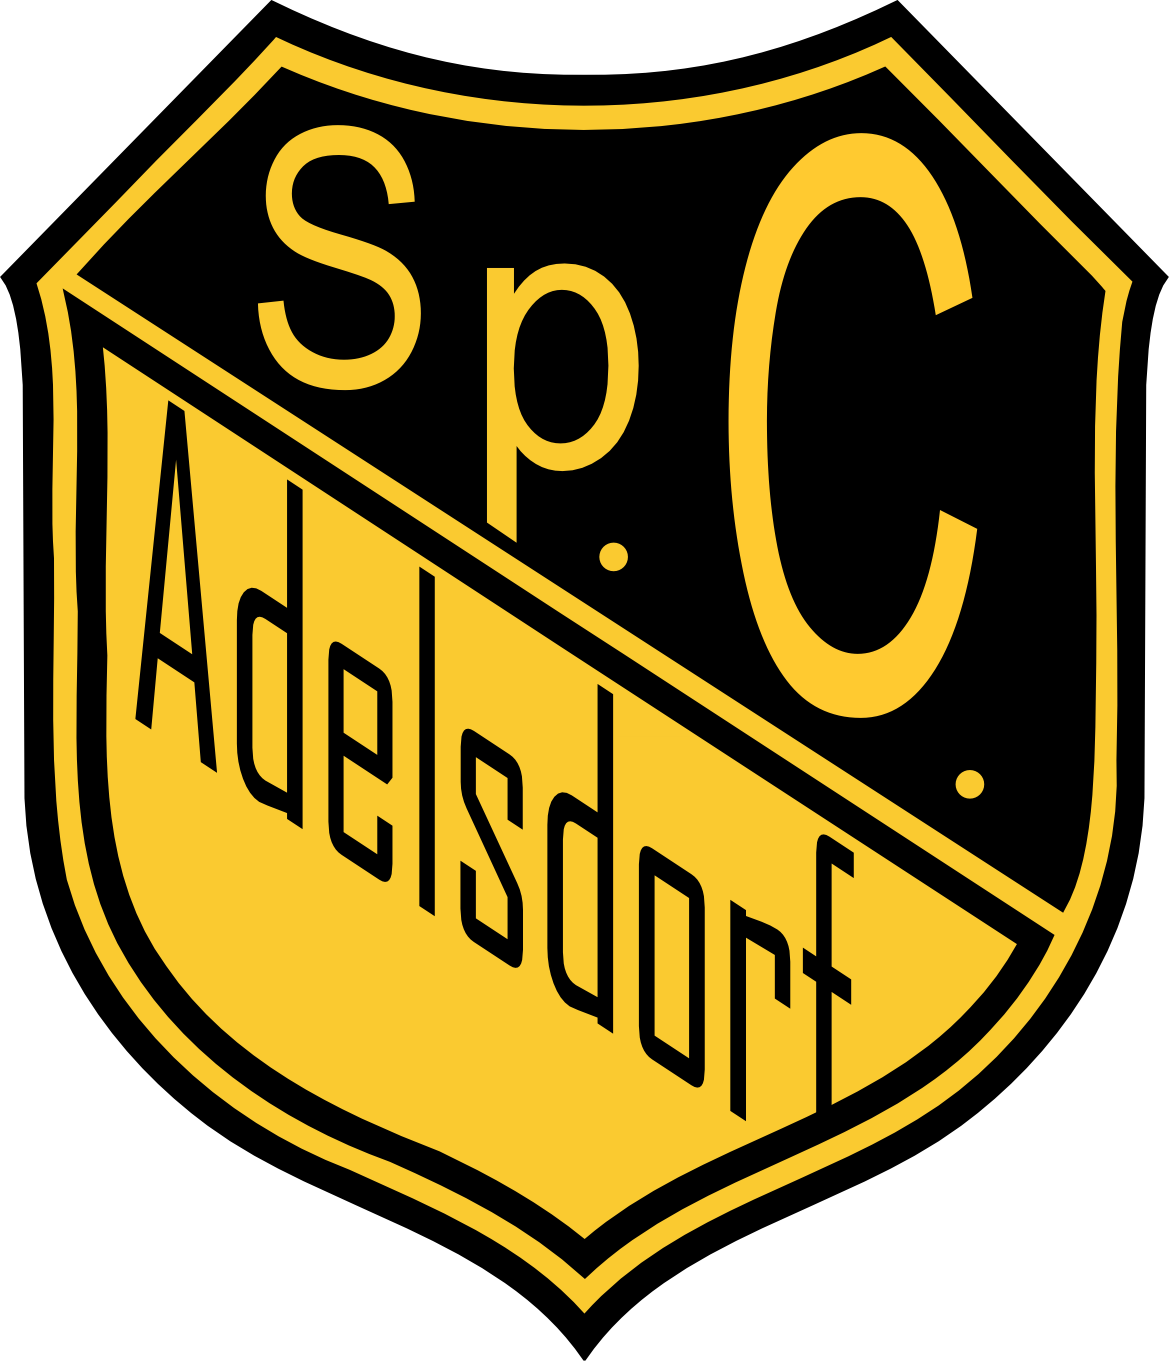 (c) Sportclubadelsdorf.de